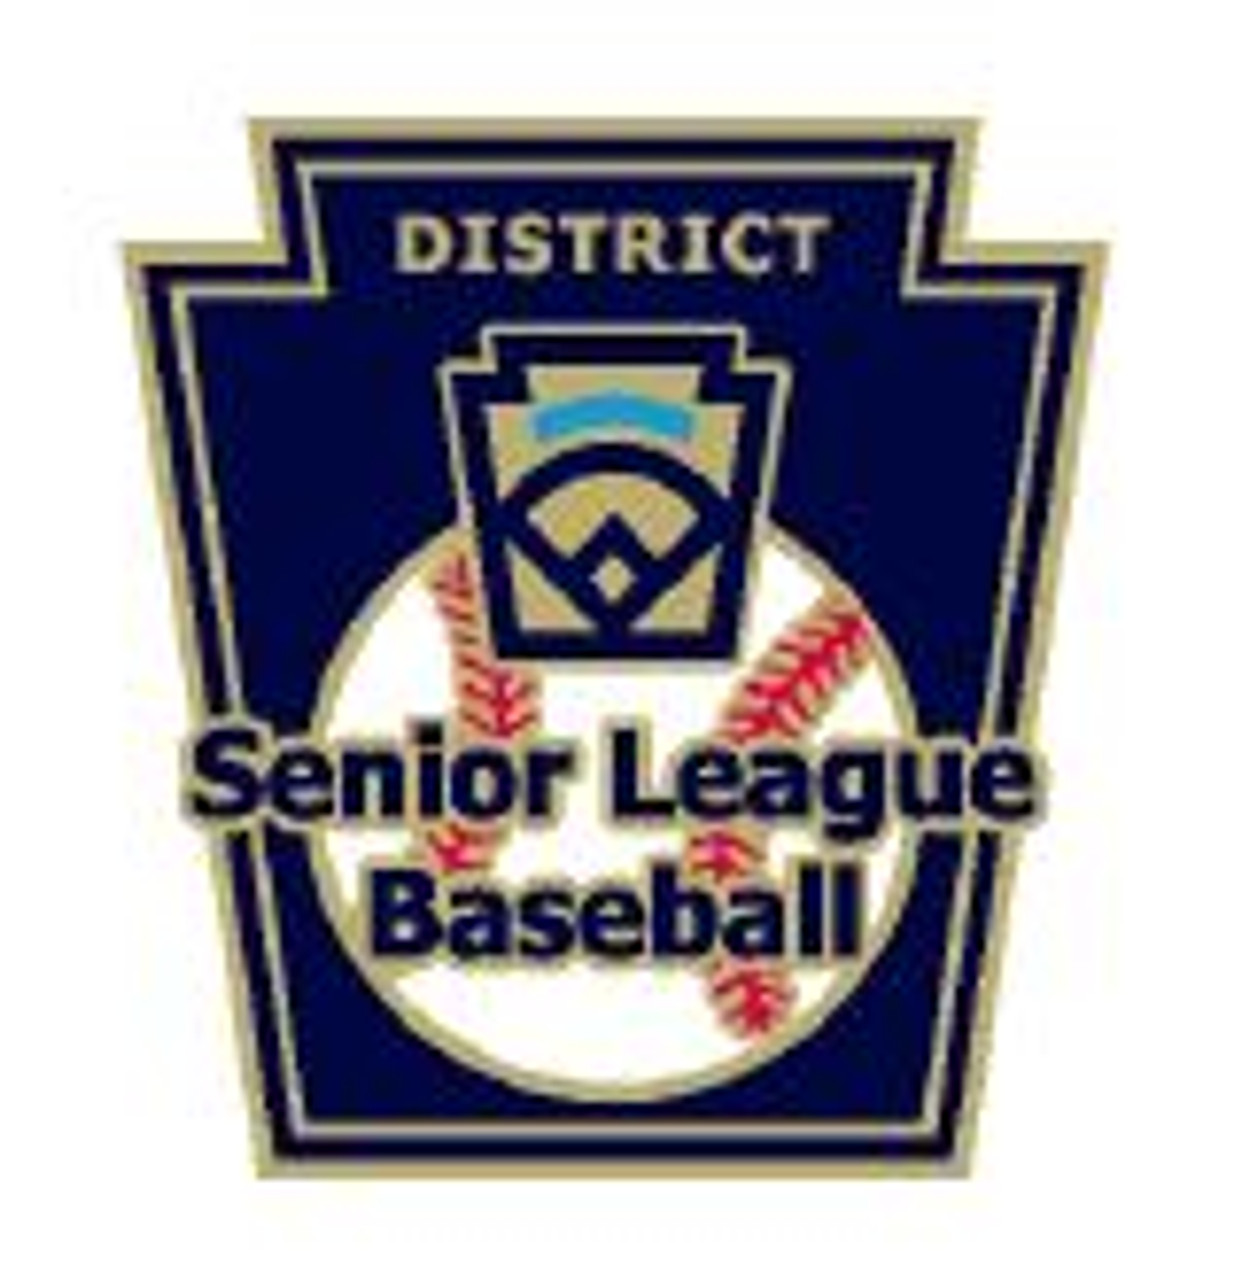 Senior League Baseball District Pin Little League Official Store